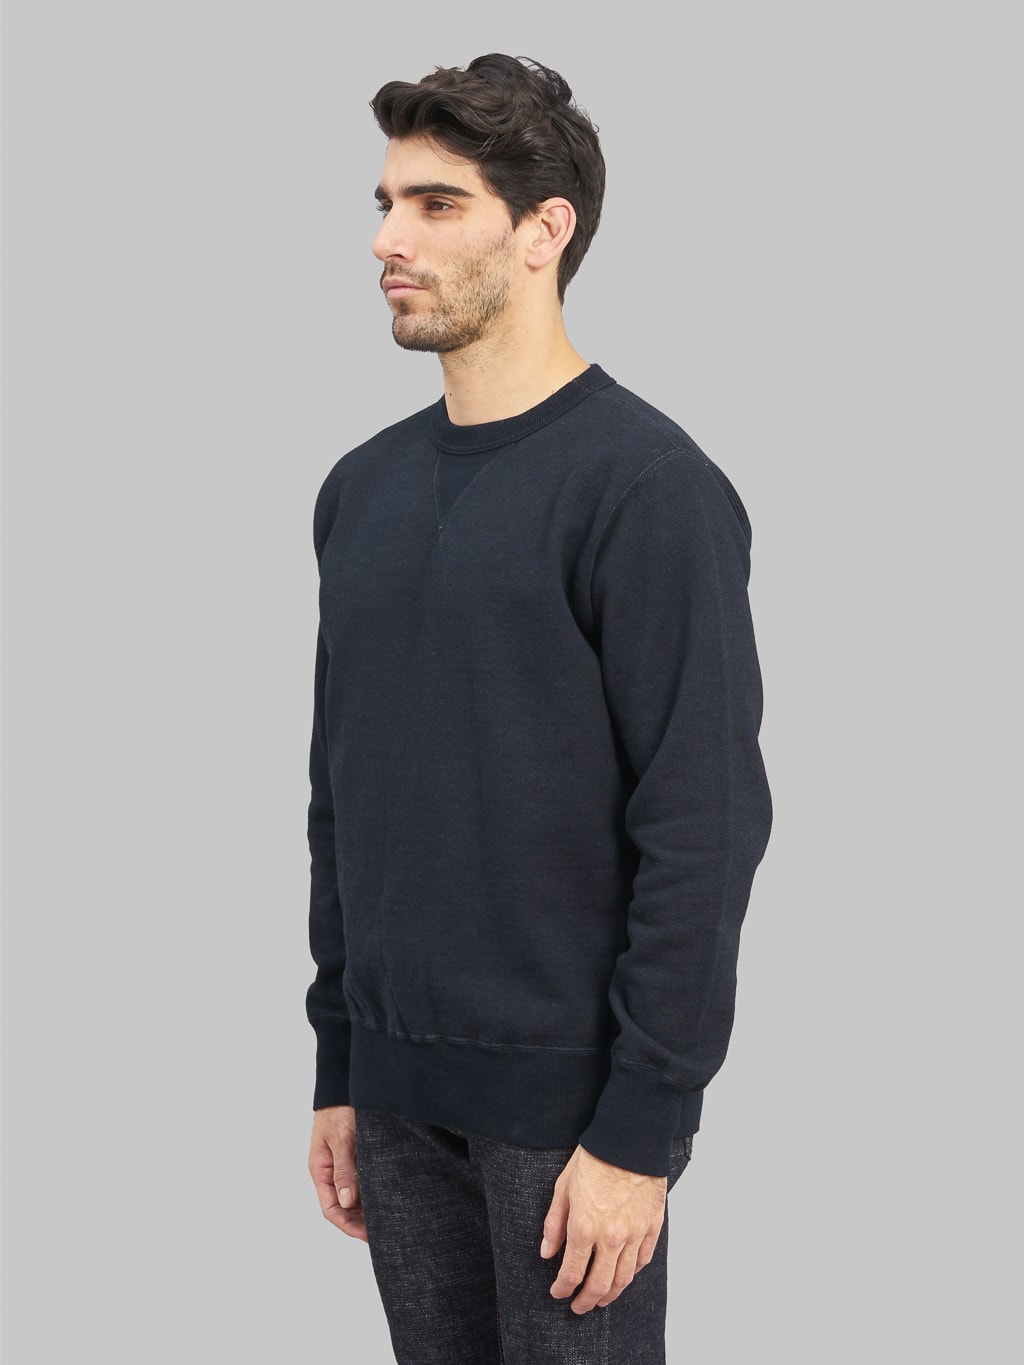 studio dartisan aishibu dyed indigo sweatshirt model side fit